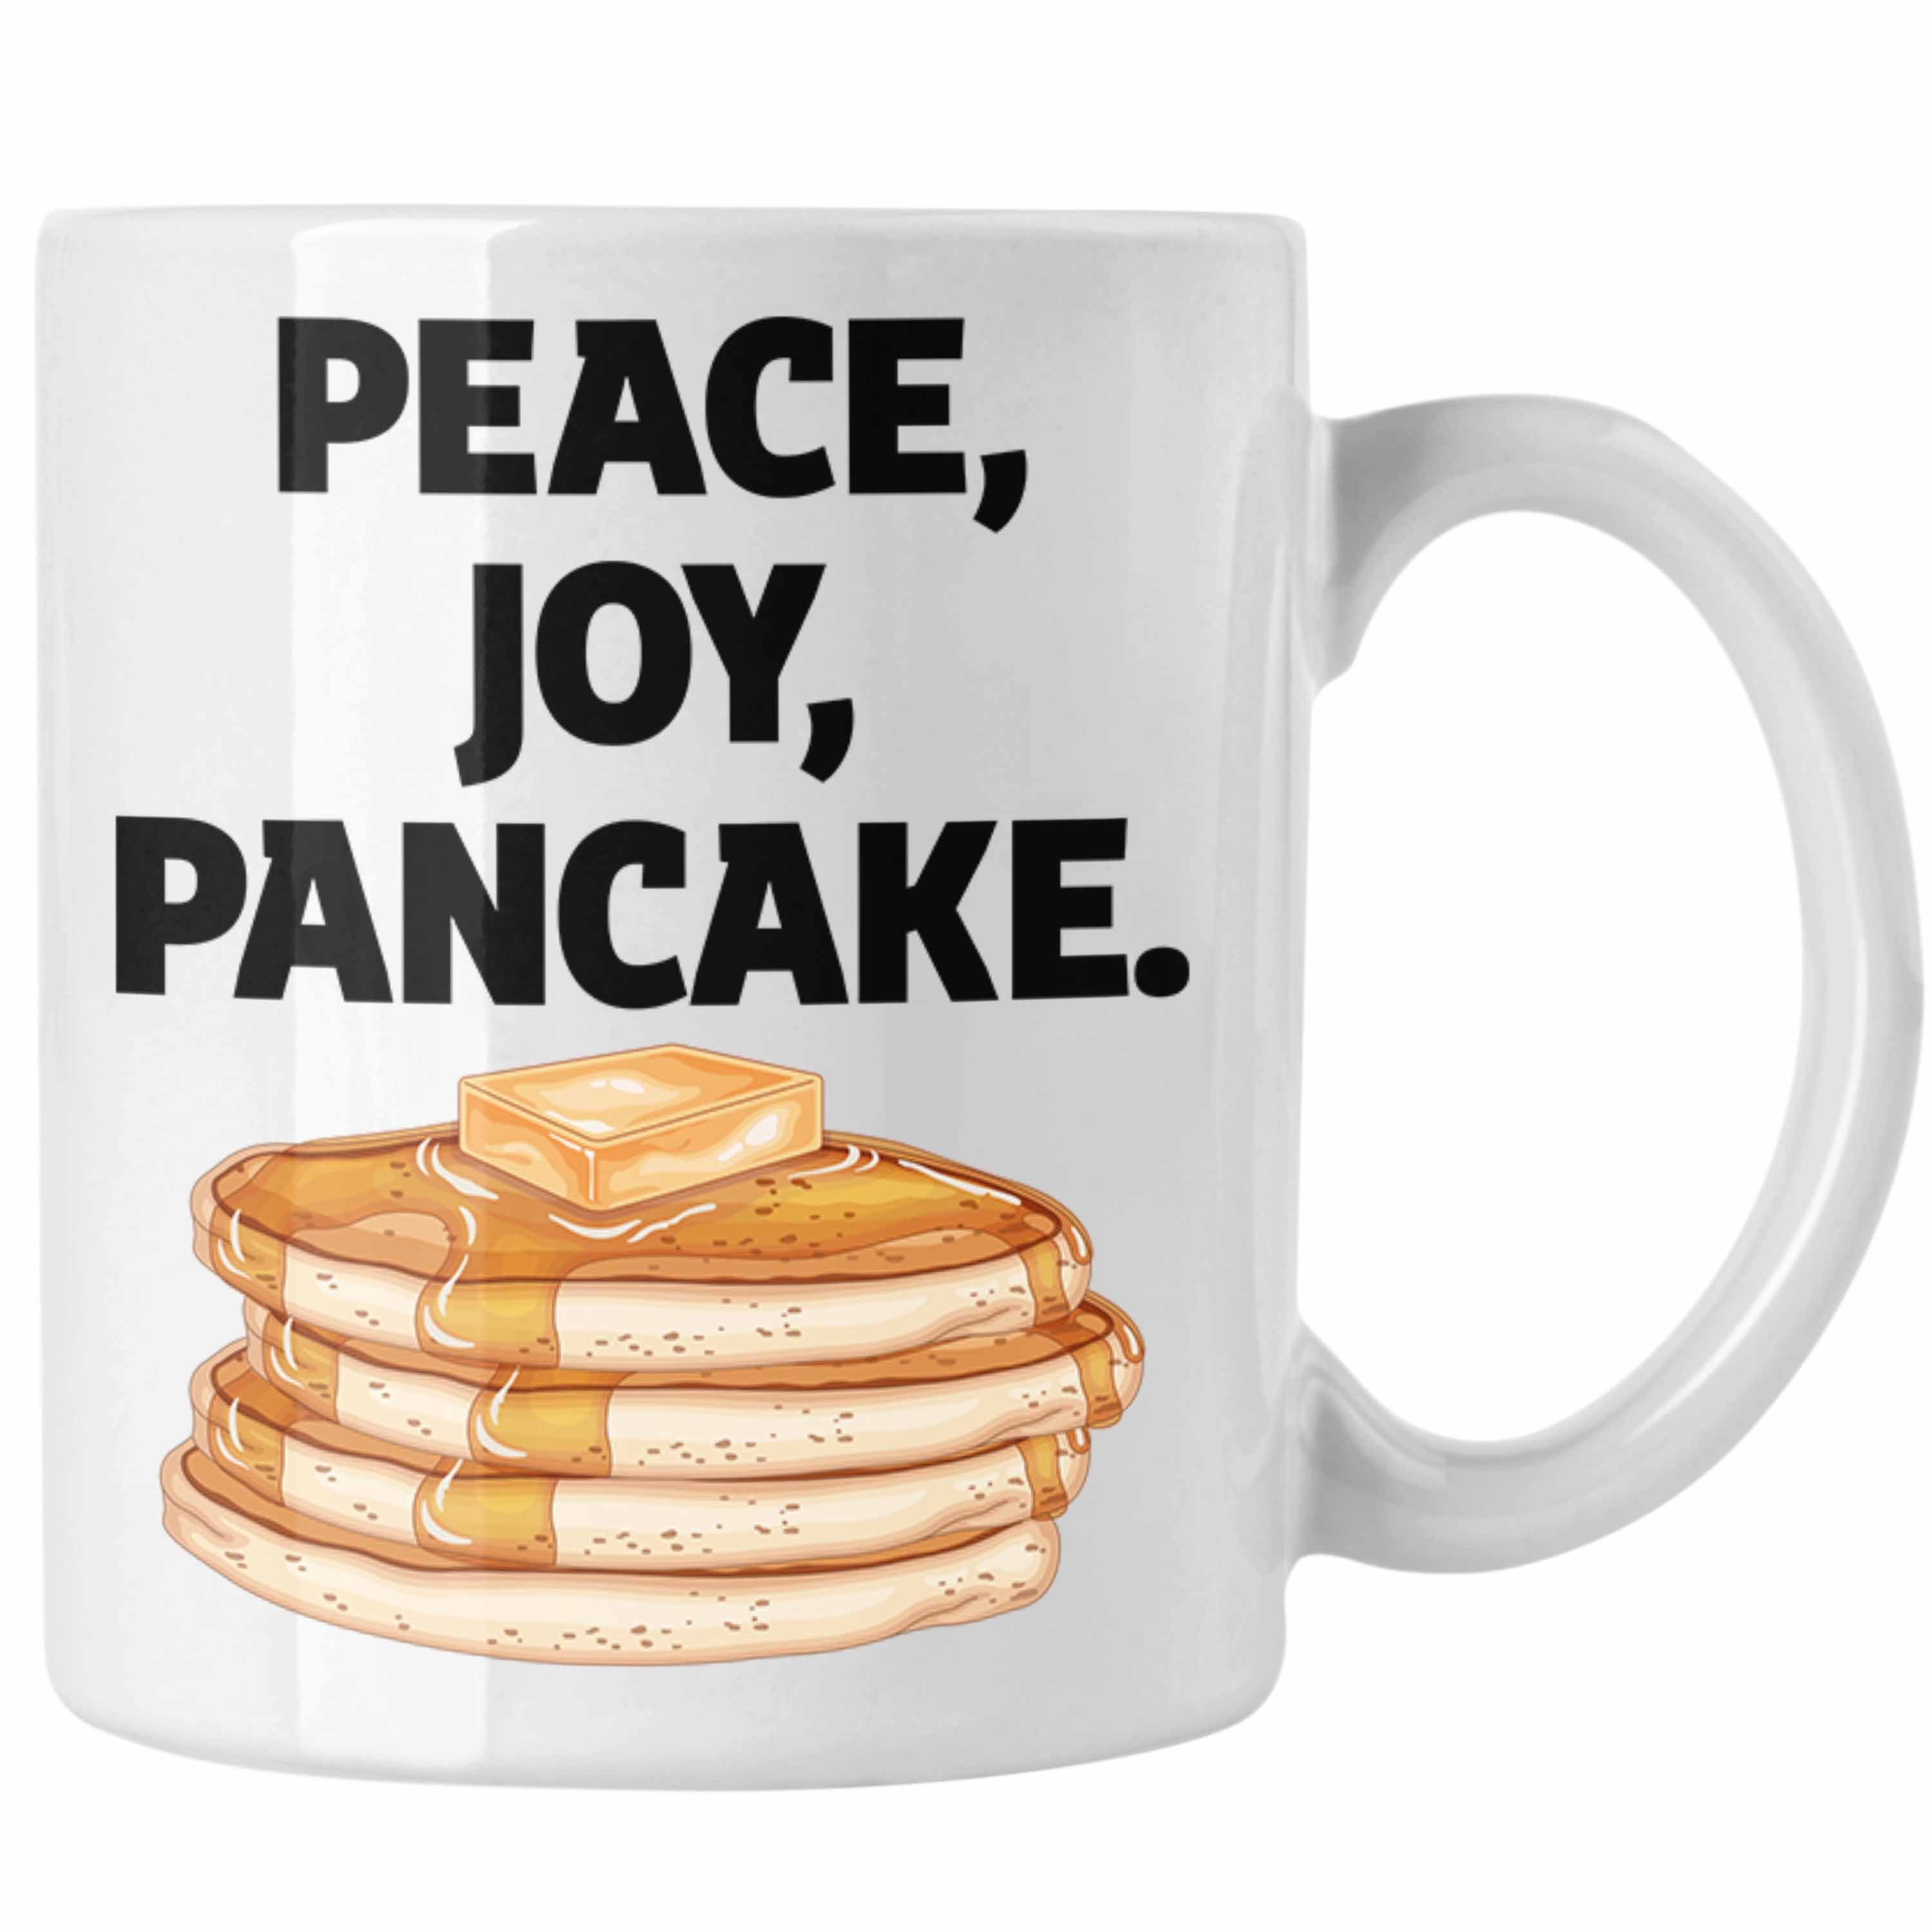 Trendation Tasse Peace Joy Pancake Tasse Geschenk Kaffee-Becher Pfannkuchen Eierkuchen Weiss